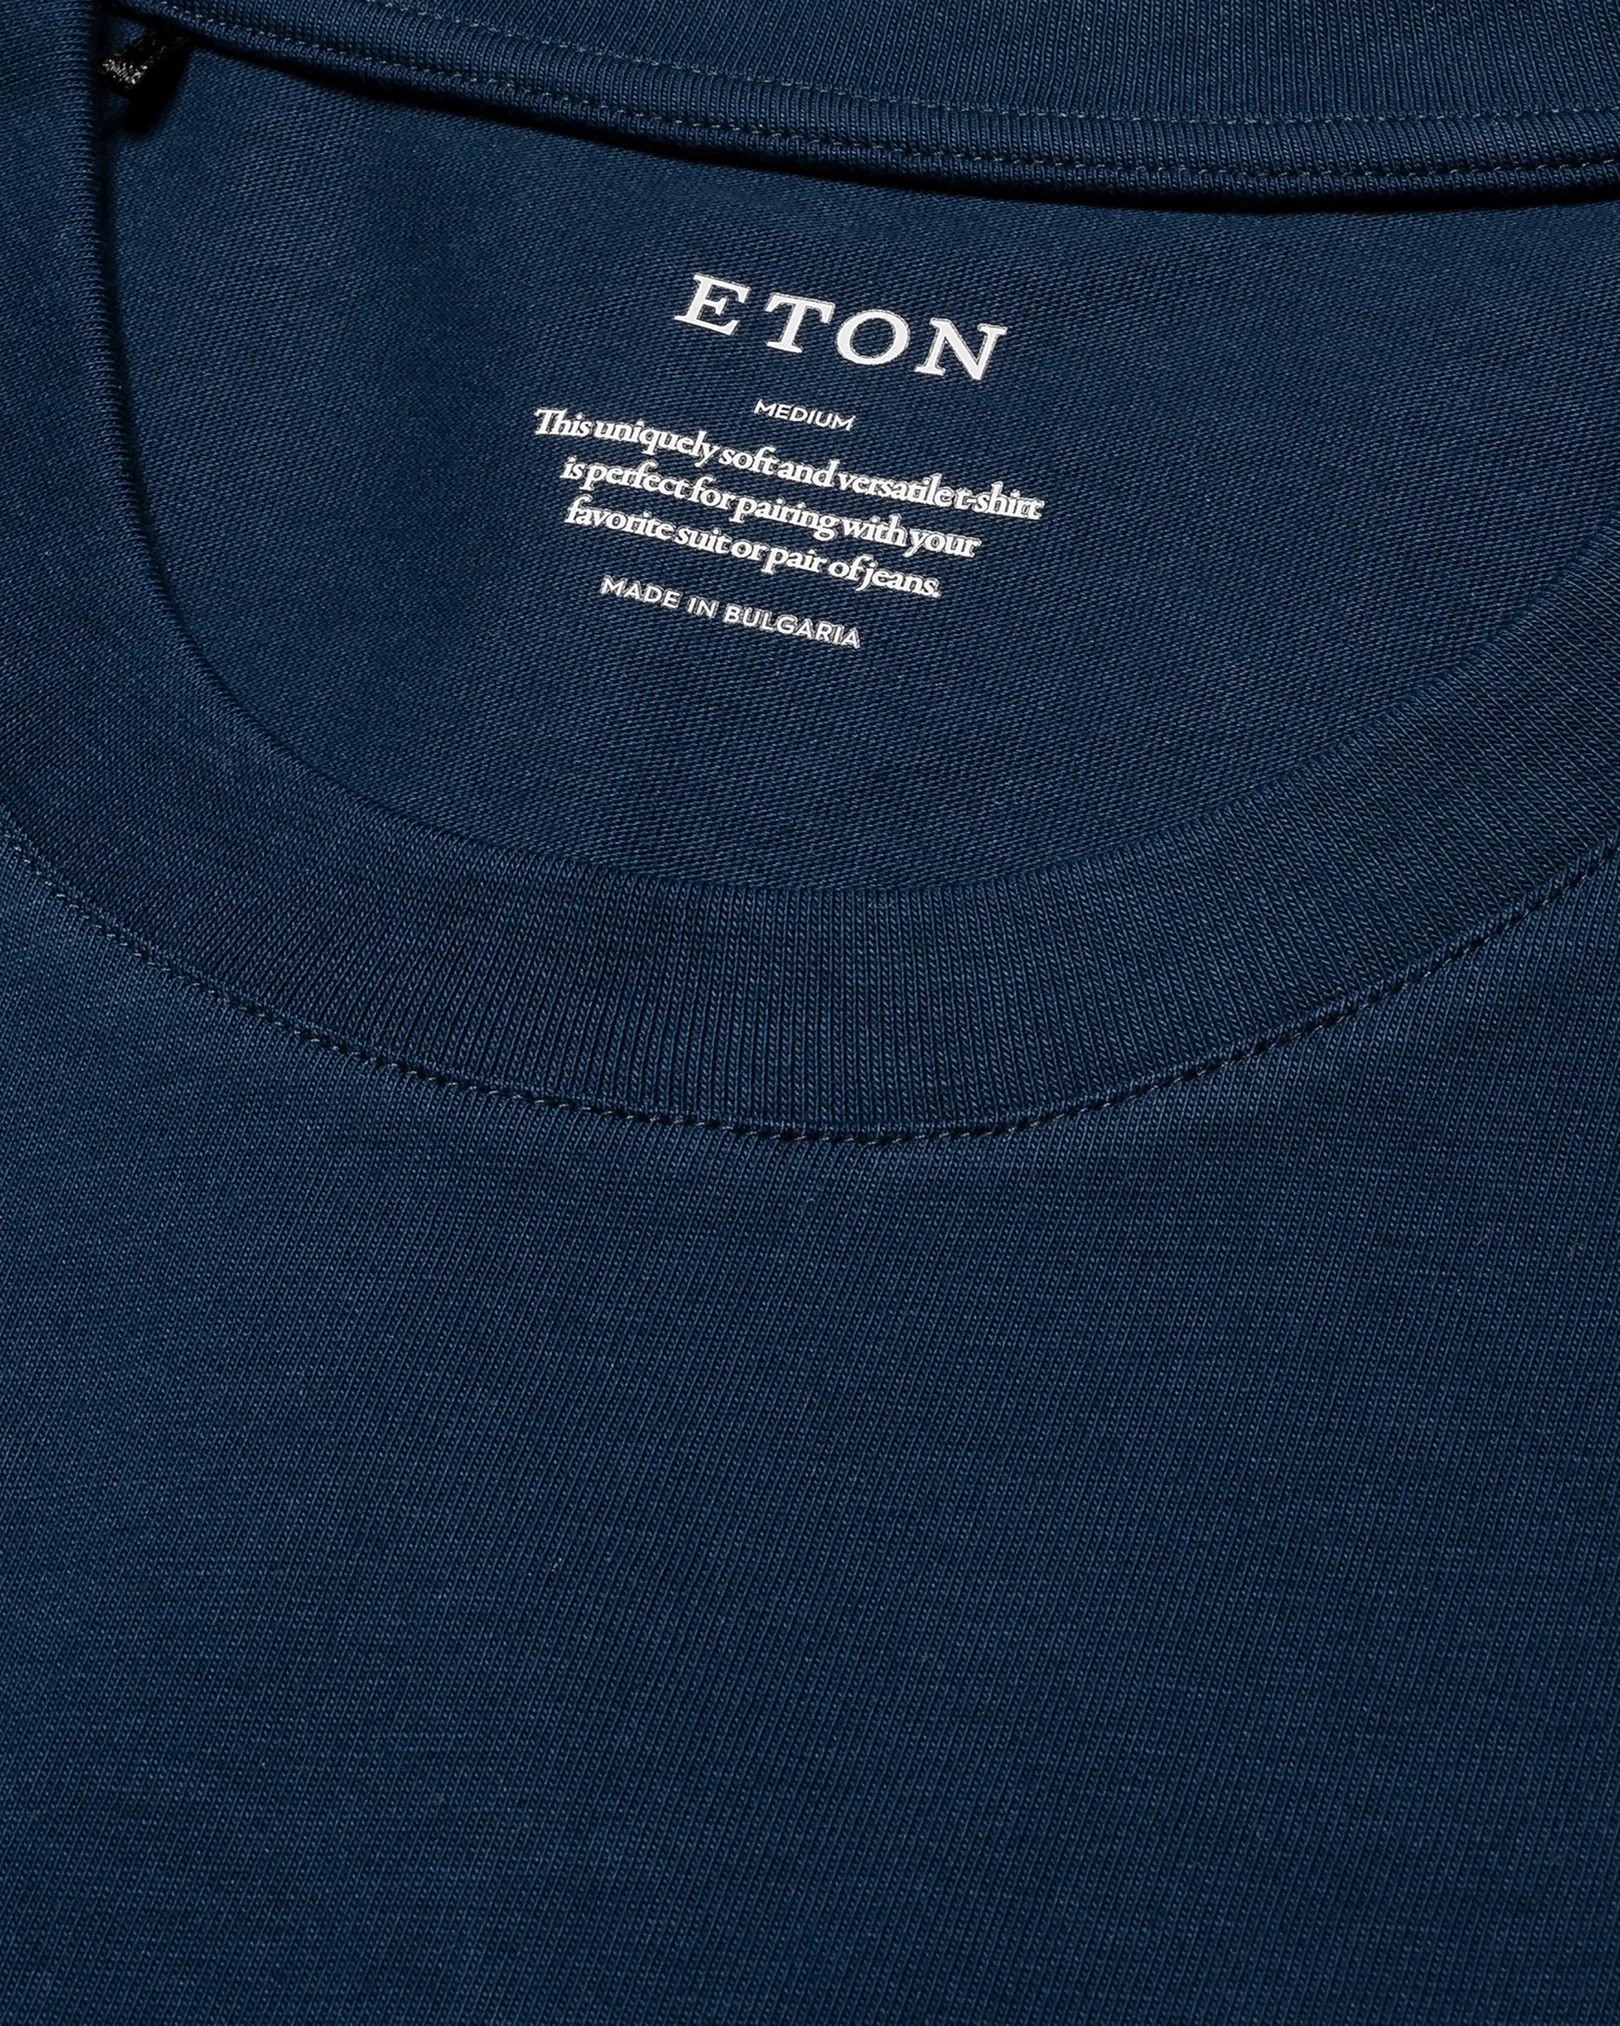 Eton - navy blue crew neck short sleeve t shirt